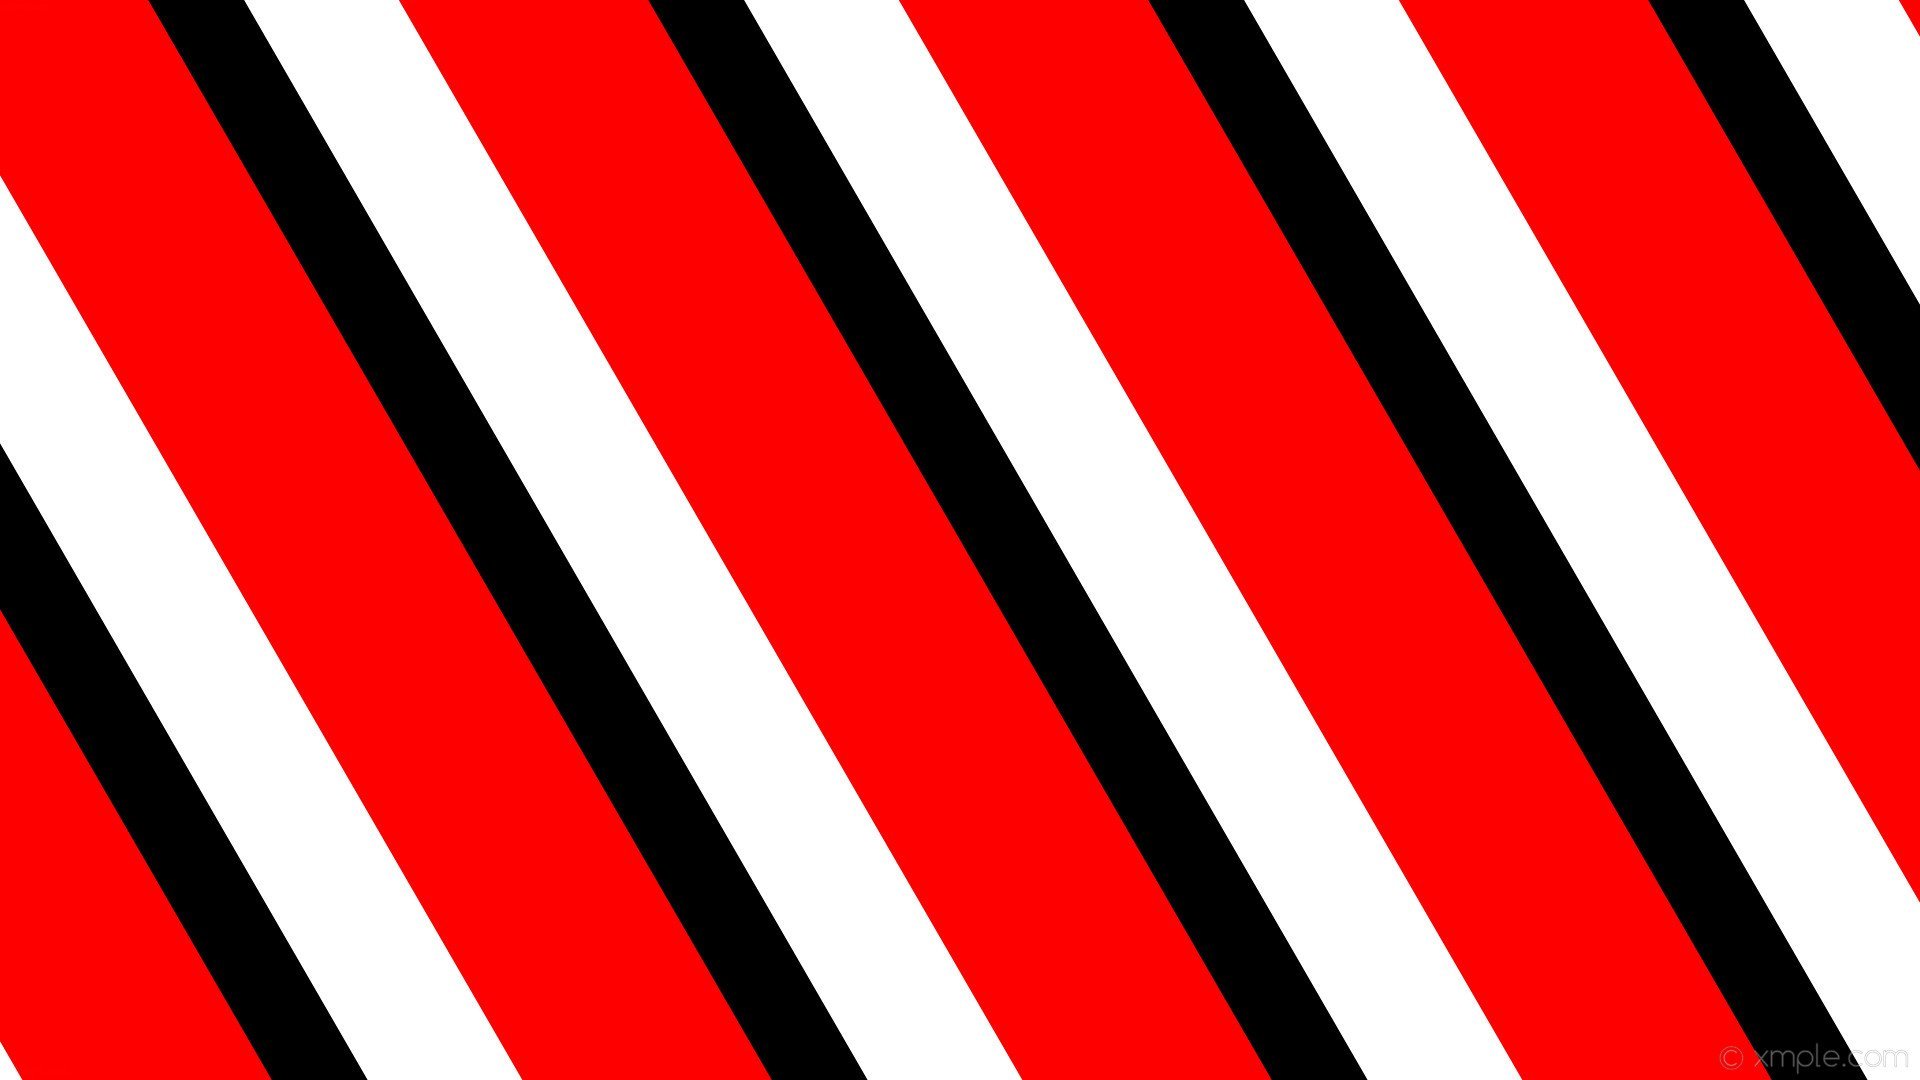 Red and white. Красно белая полоска. Красная полоса. Черно красные полосы. Черно красные полоски.